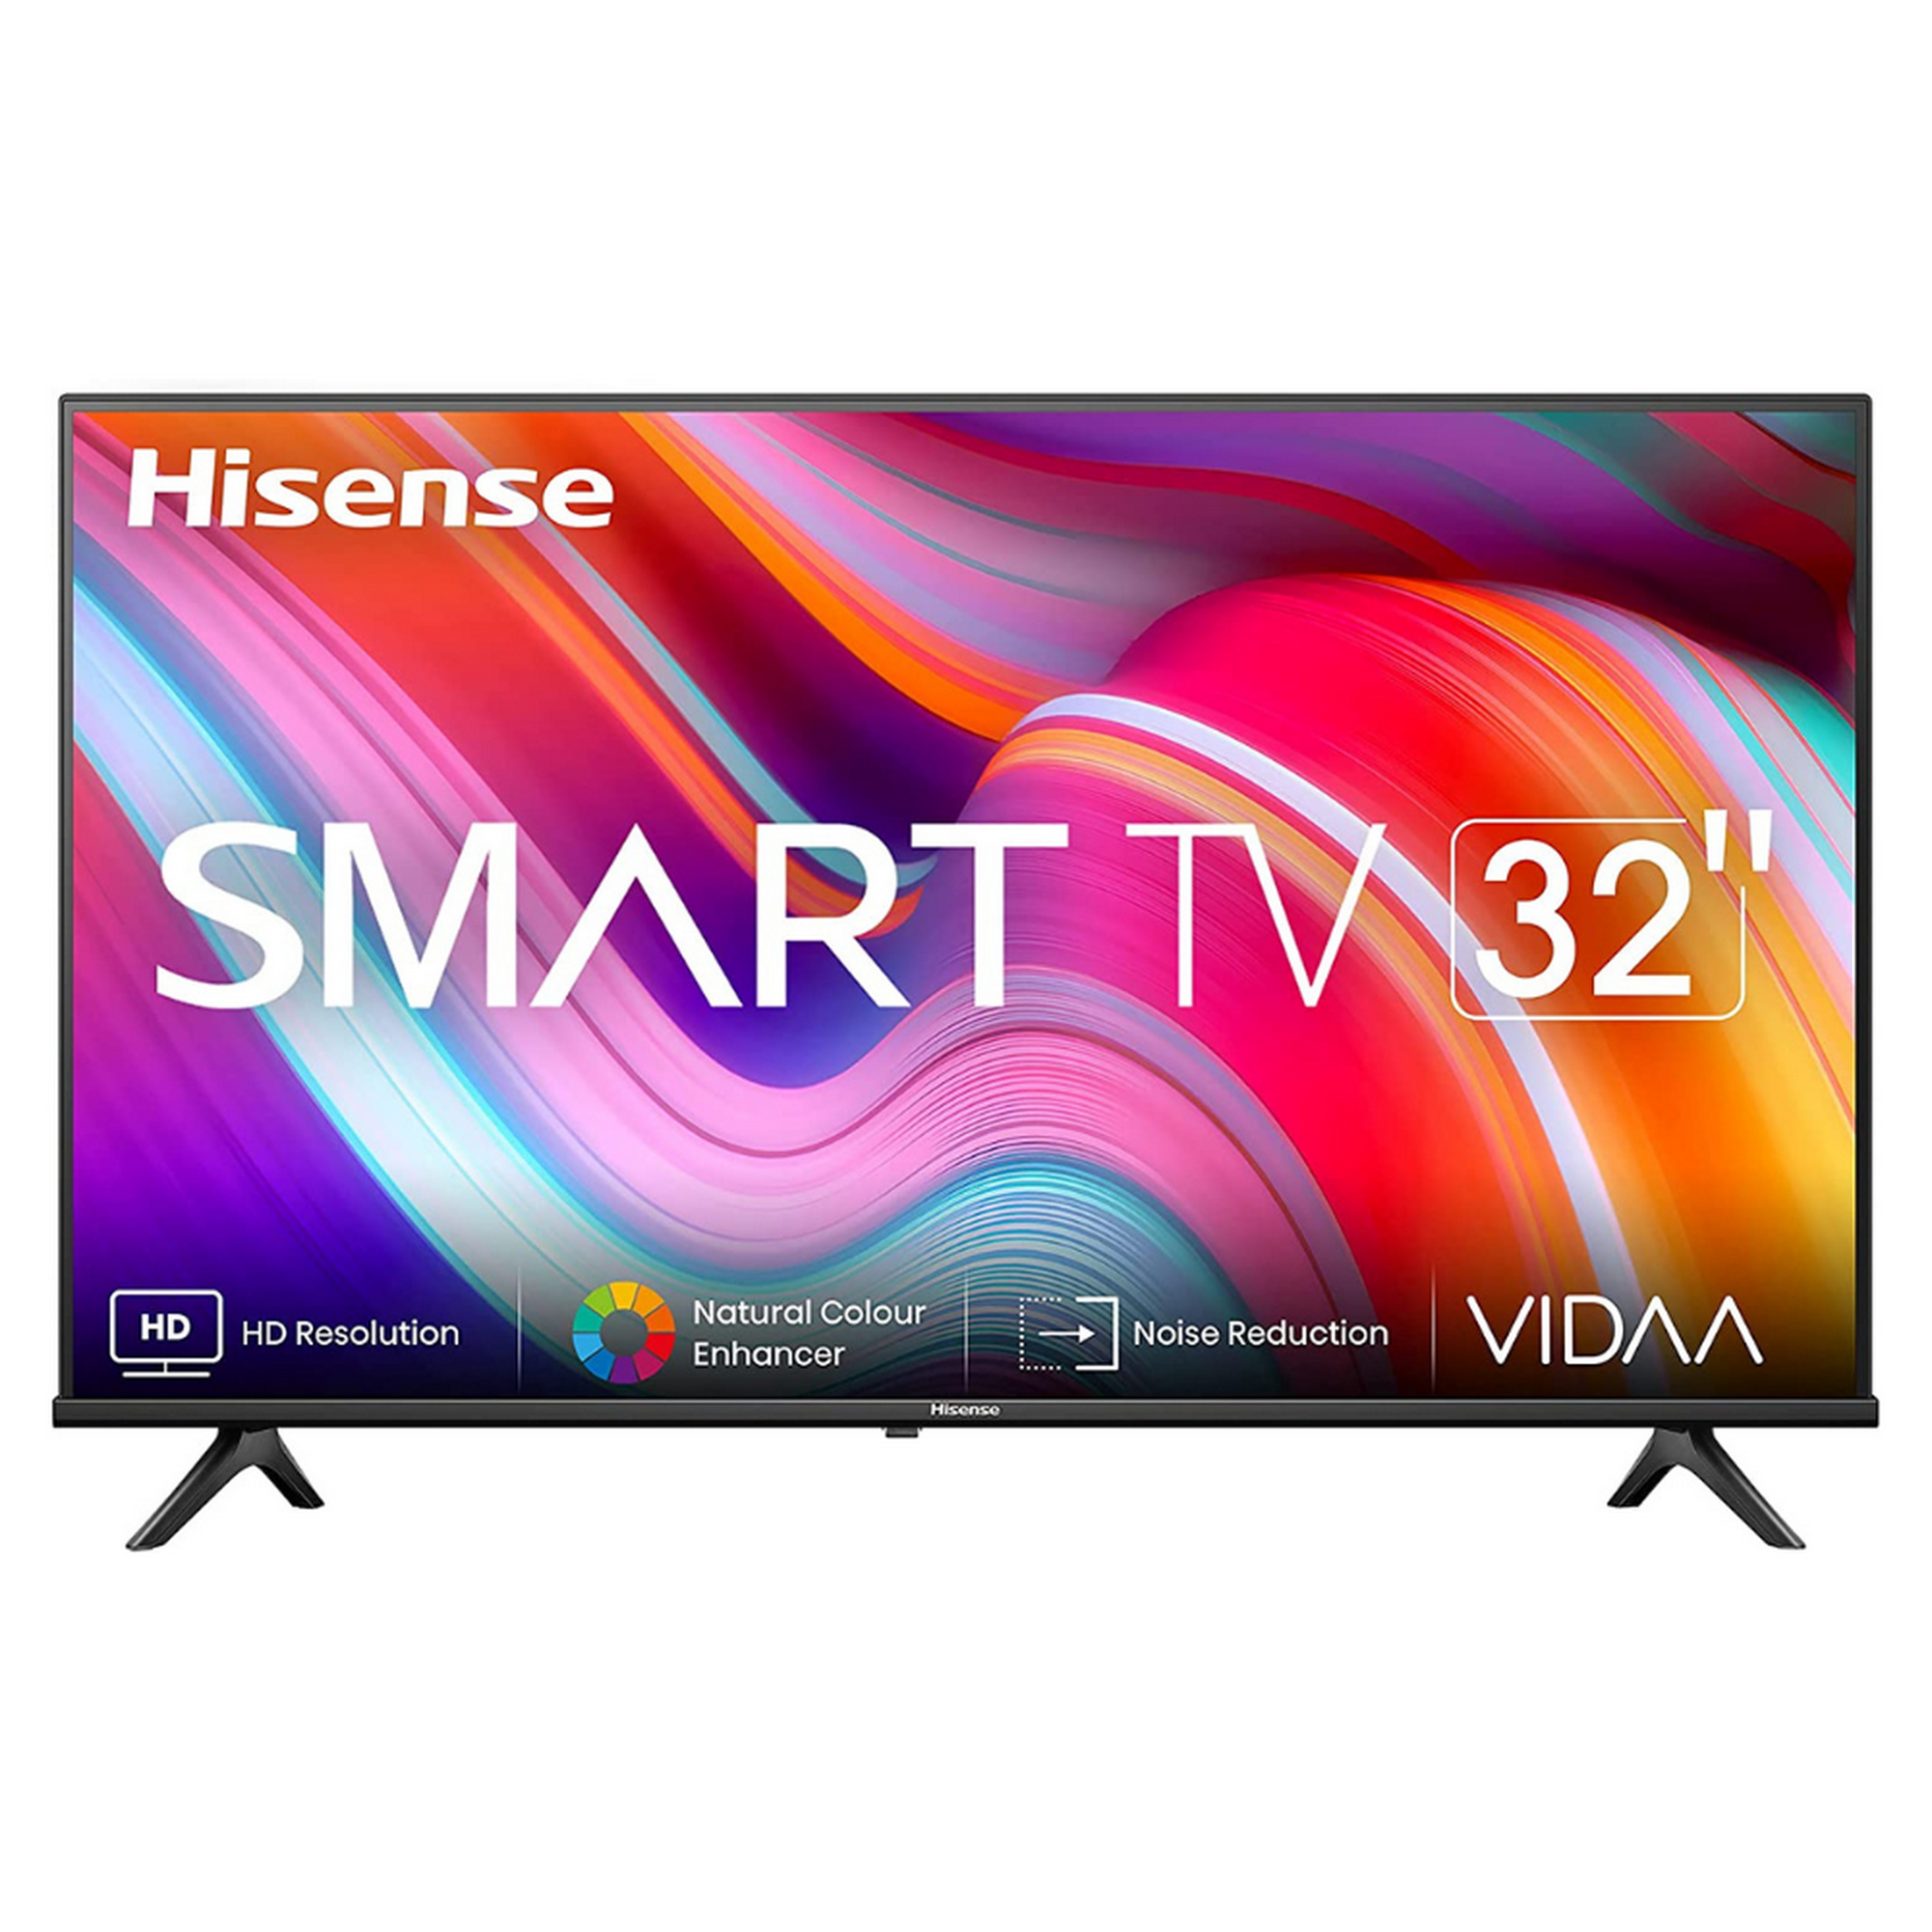 Smart tv hisense 32a4kv hd led 60hz vidaa dts x motion rate 120 game mode hisense smart tv 32a4kv vidaa tv hd